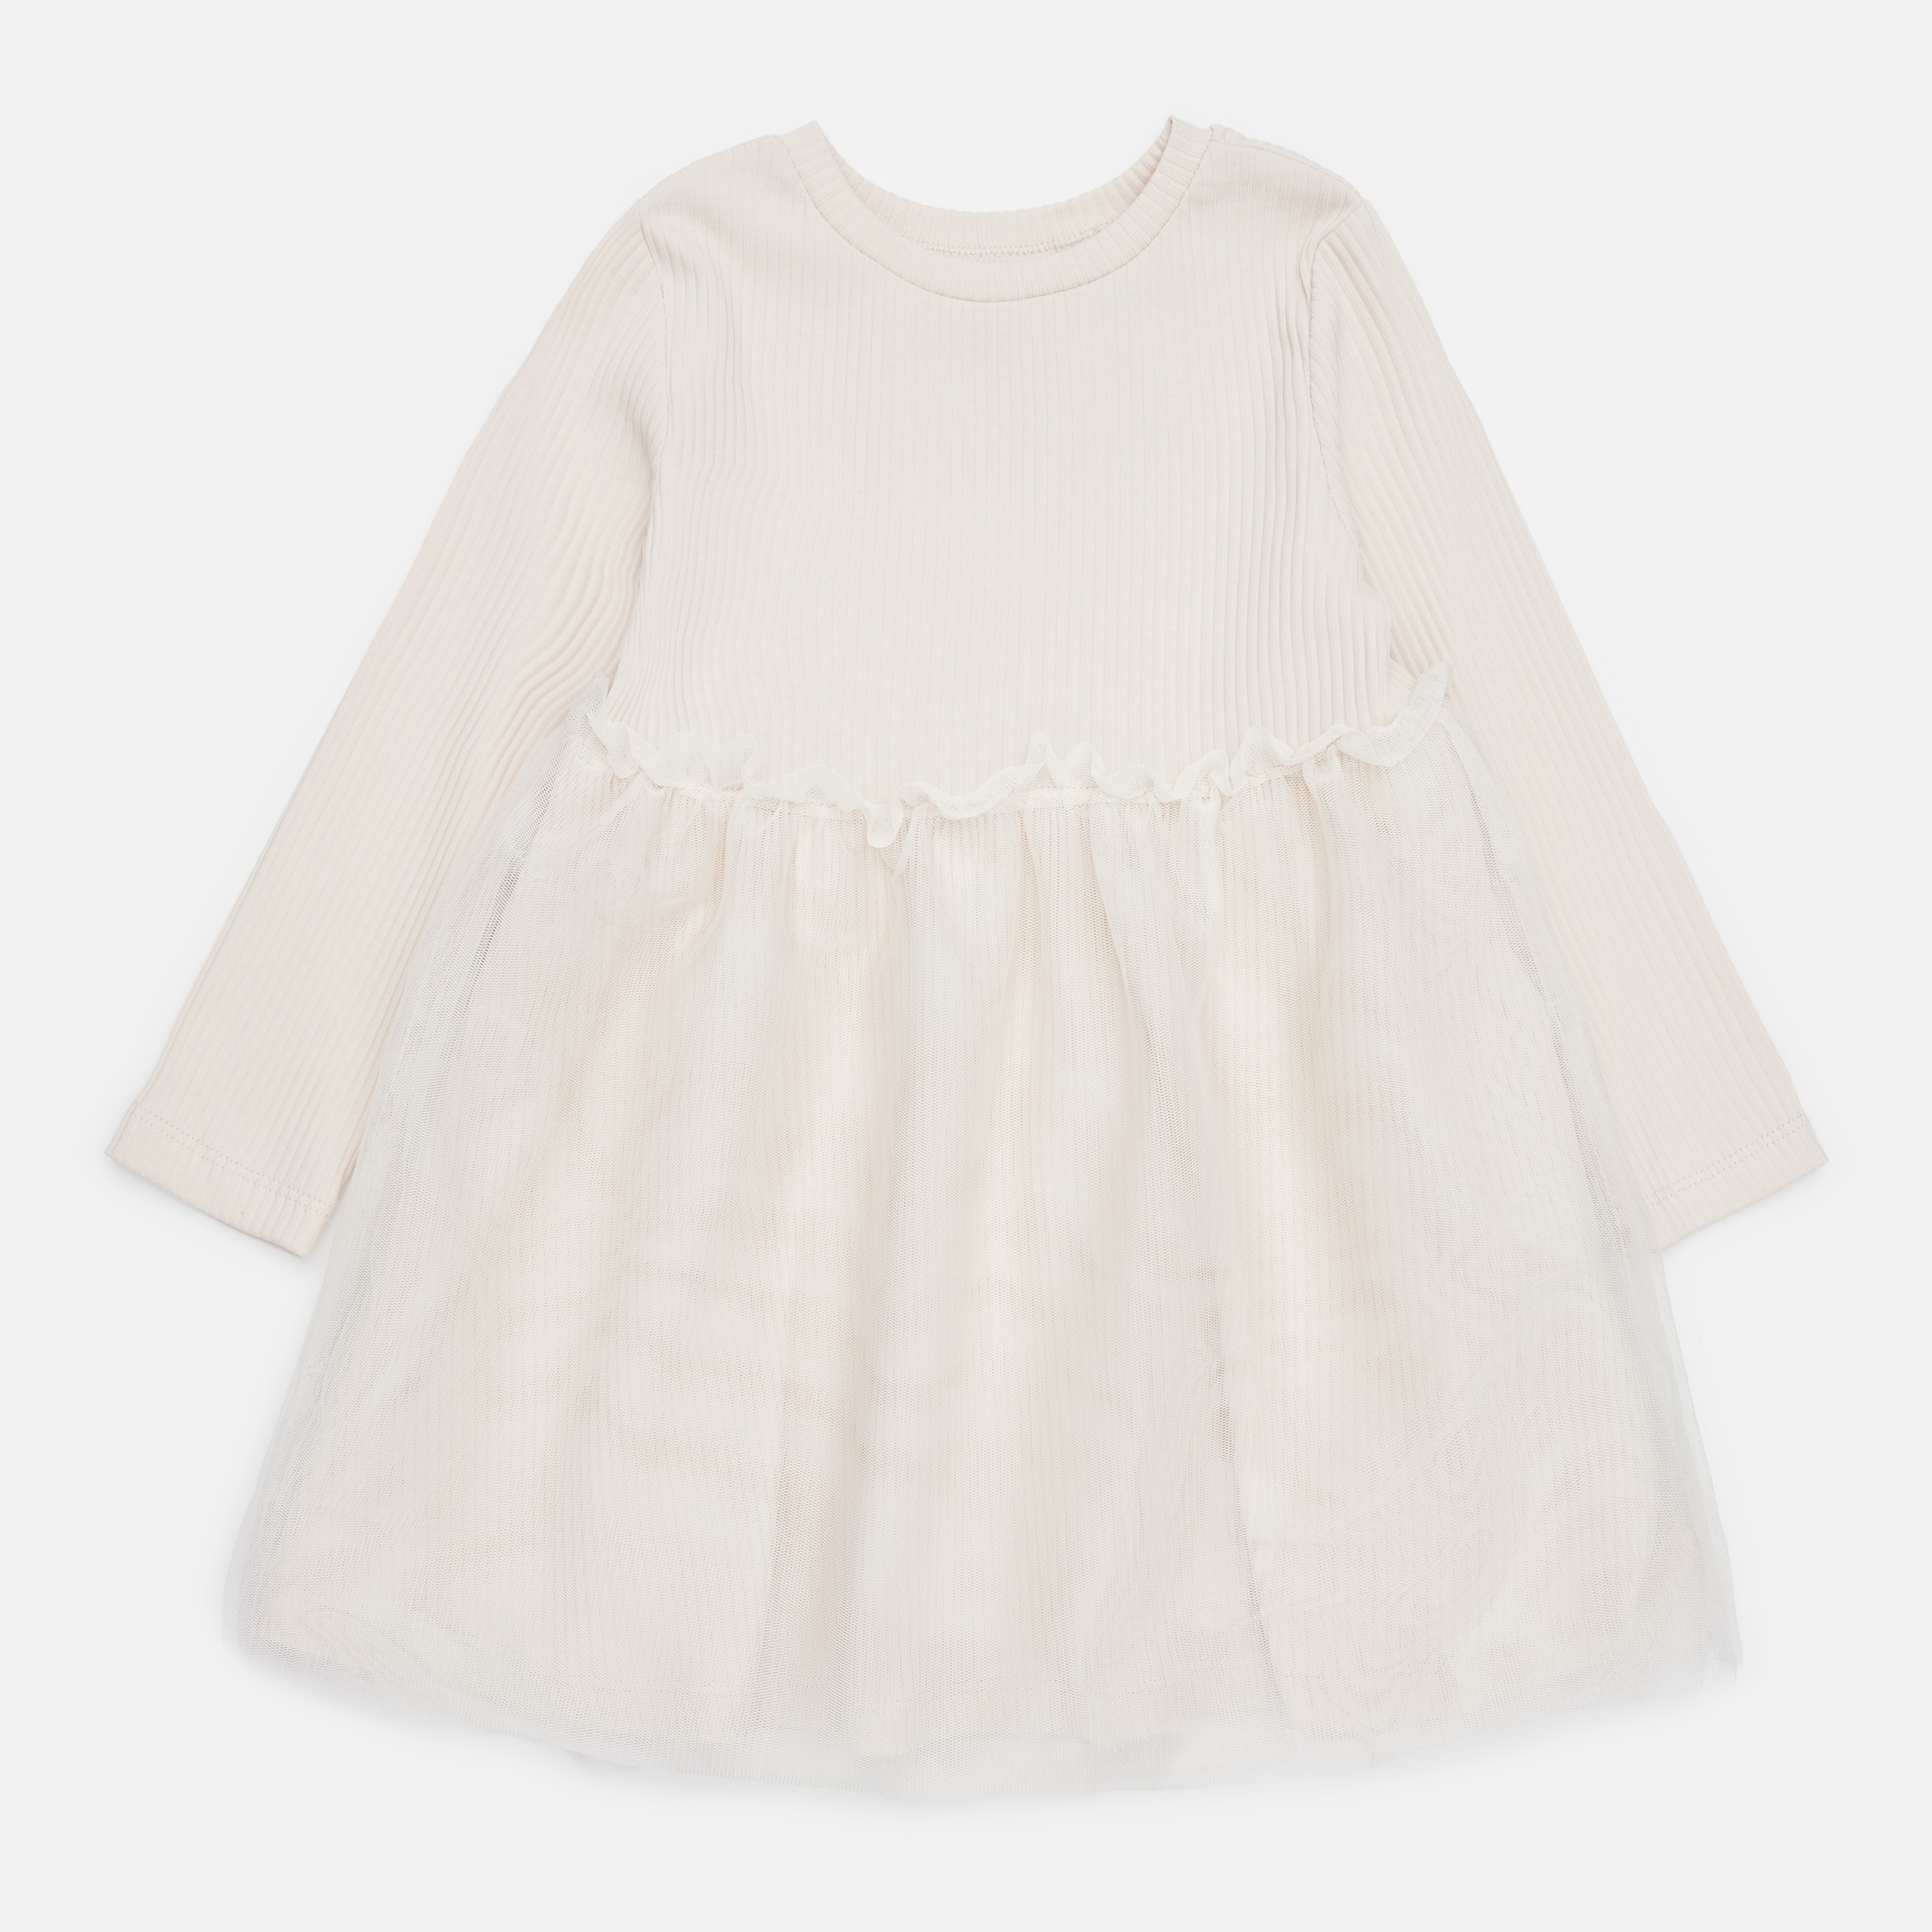 Акция на Дитяче плаття для дівчинки Бемби PL399-200 92 см Молочне (14399727437.200) от Rozetka